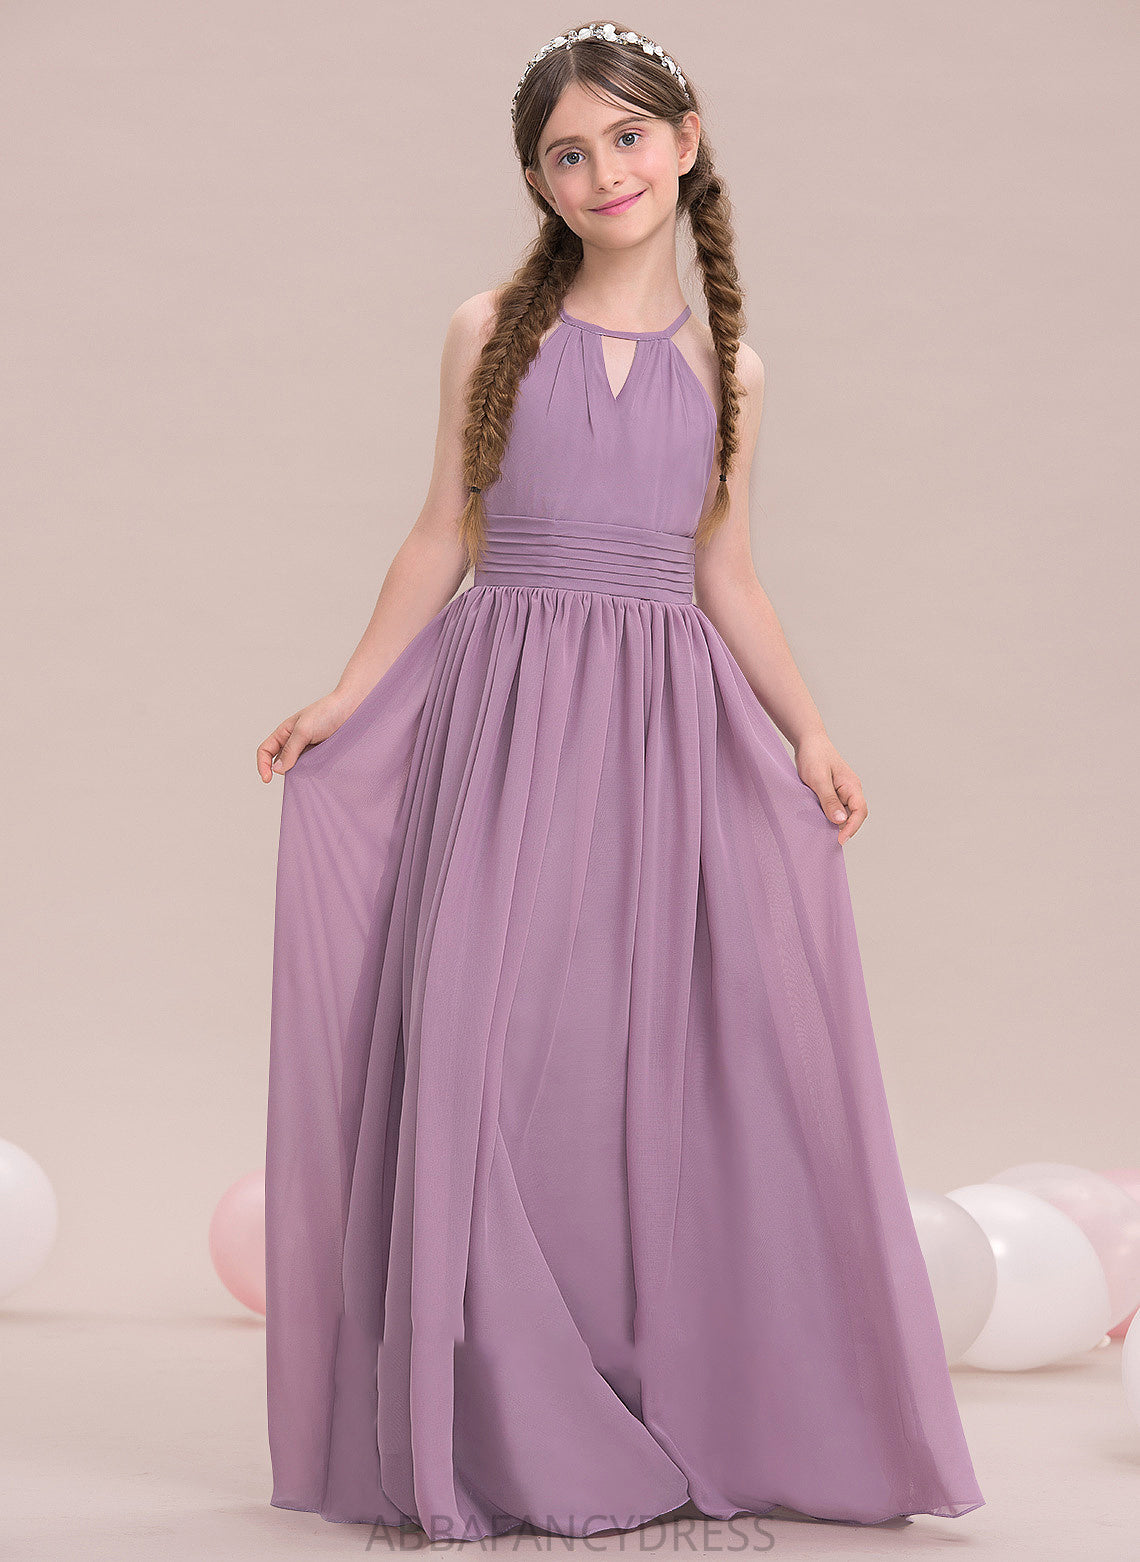 A-LineScoopNeckFloor-LengthChiffonJuniorBridesmaidDressWithRuffle#119580 Junior Bridesmaid Dresses Presley